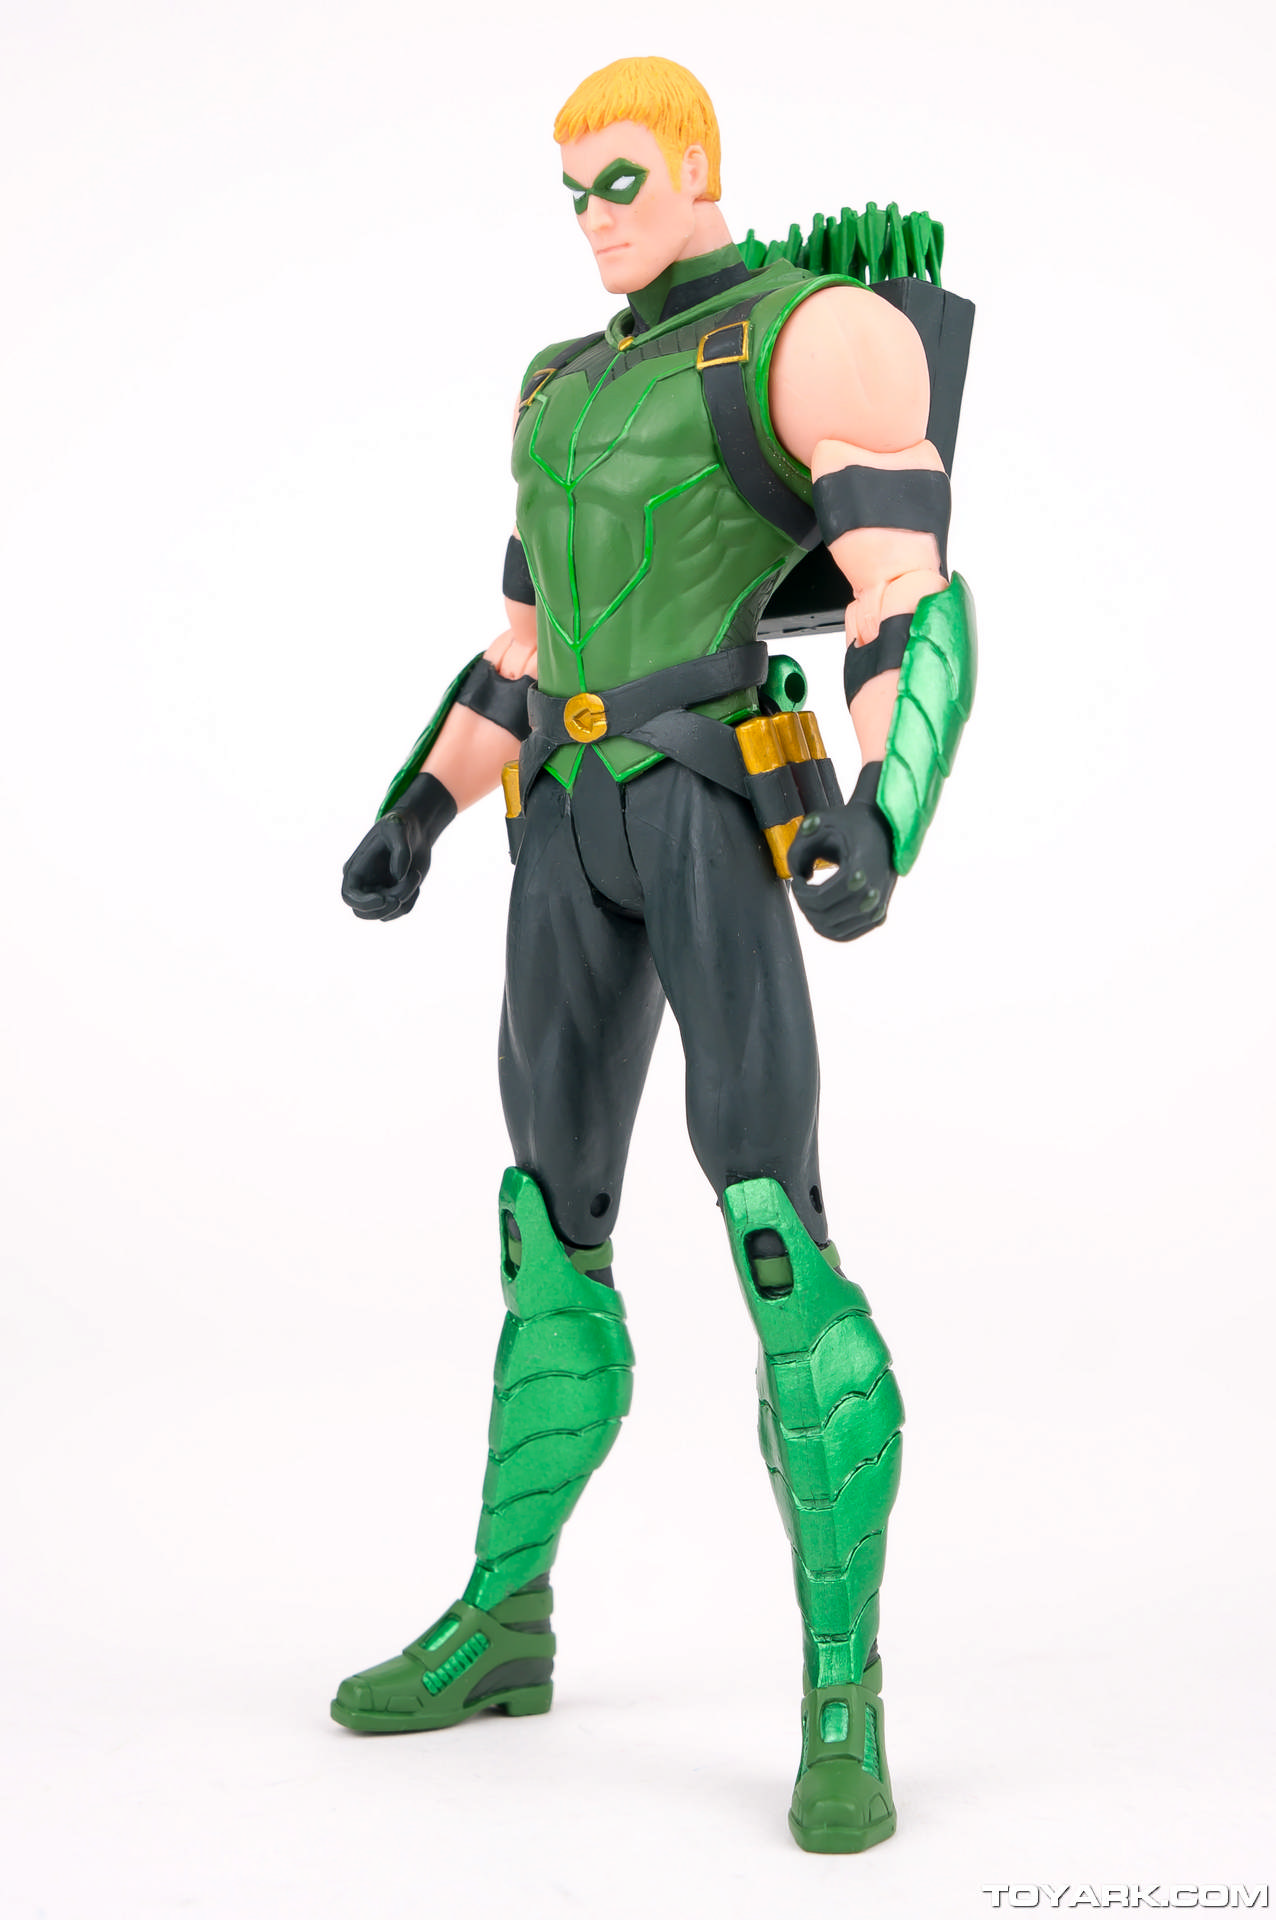 Dc Collectibles New Green Arrow Photo Shoot The Toyark News